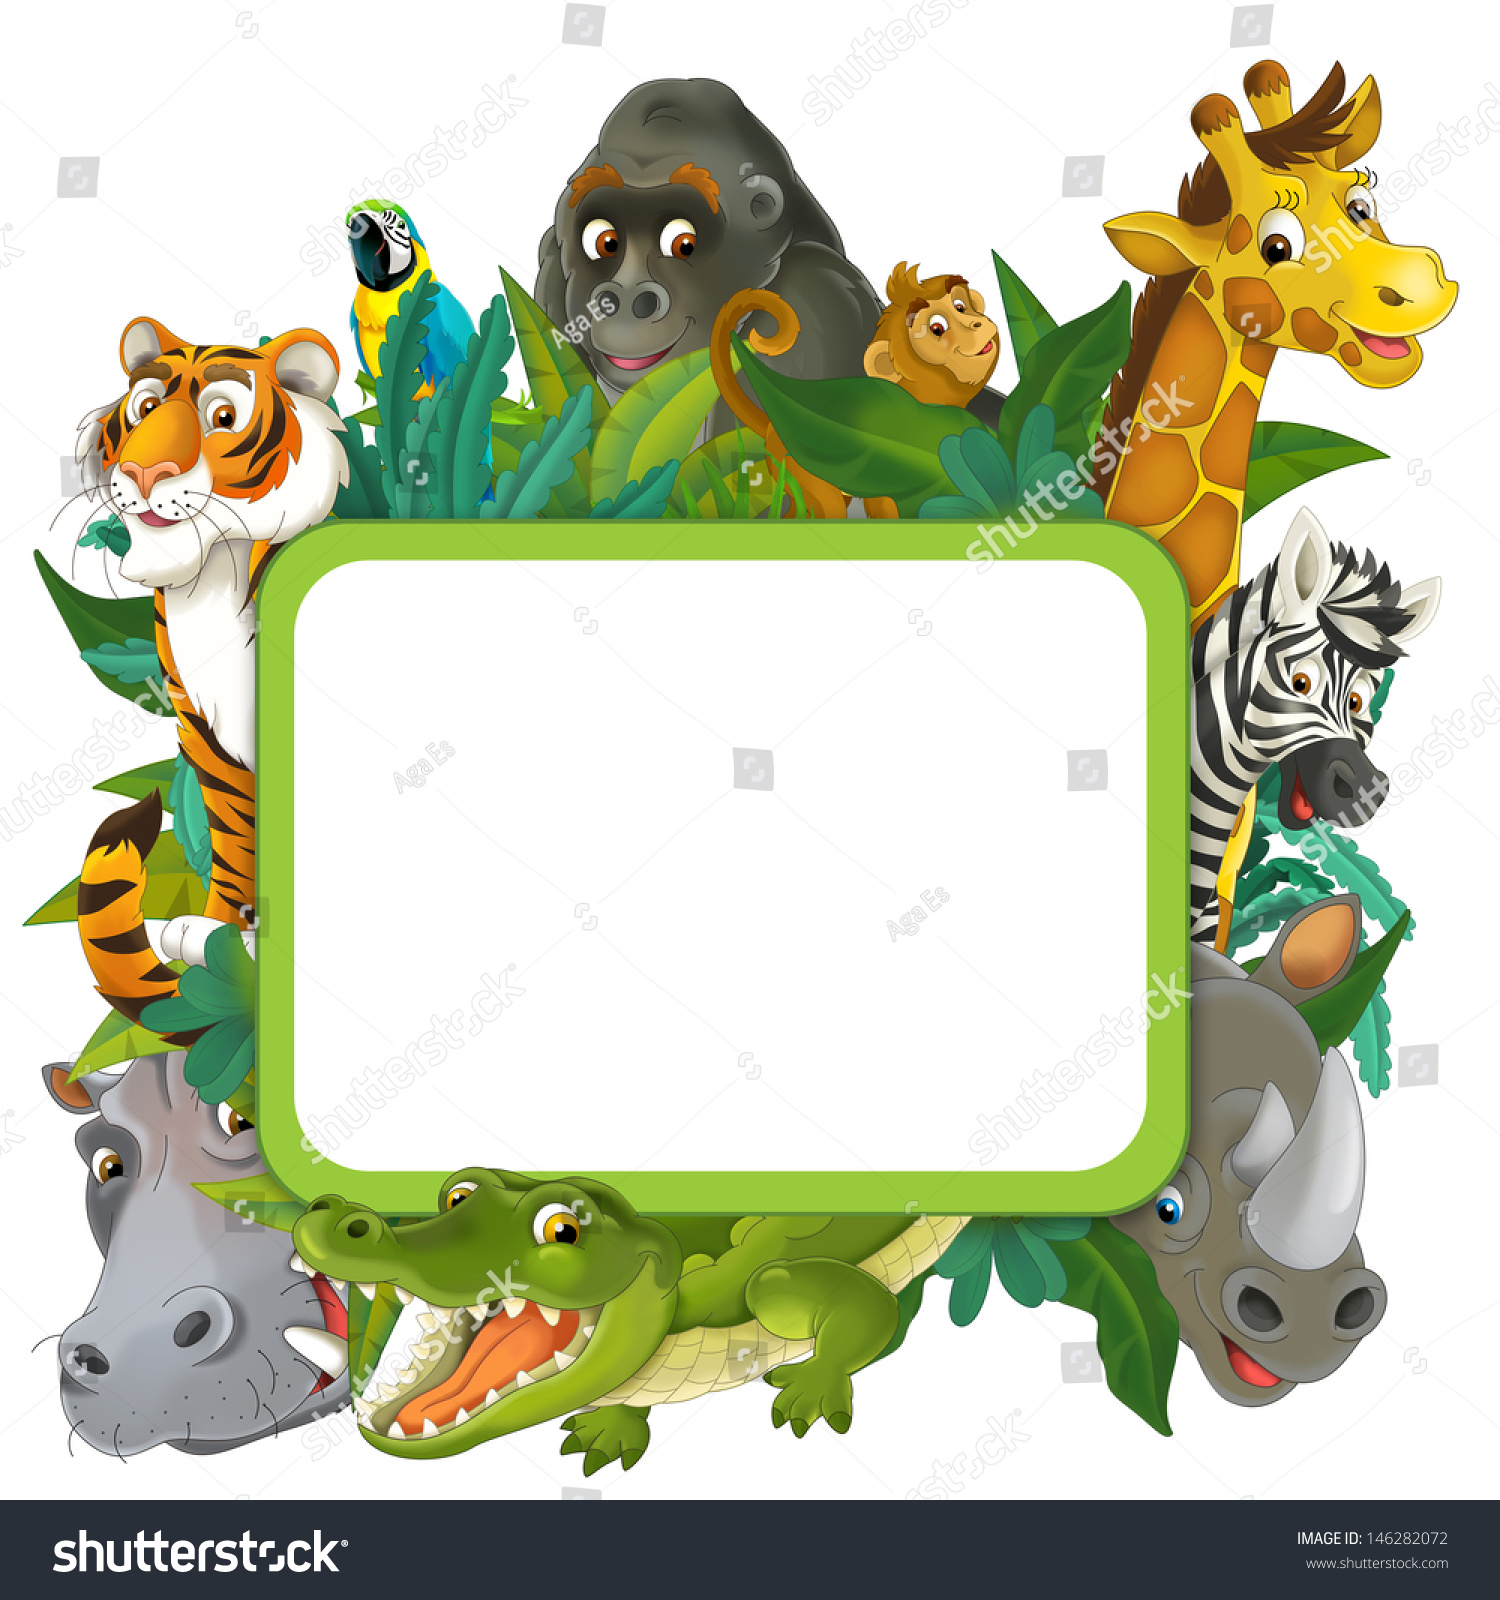 Banner - Frame - Border - Jungle Safari Theme - Illustration For The ...